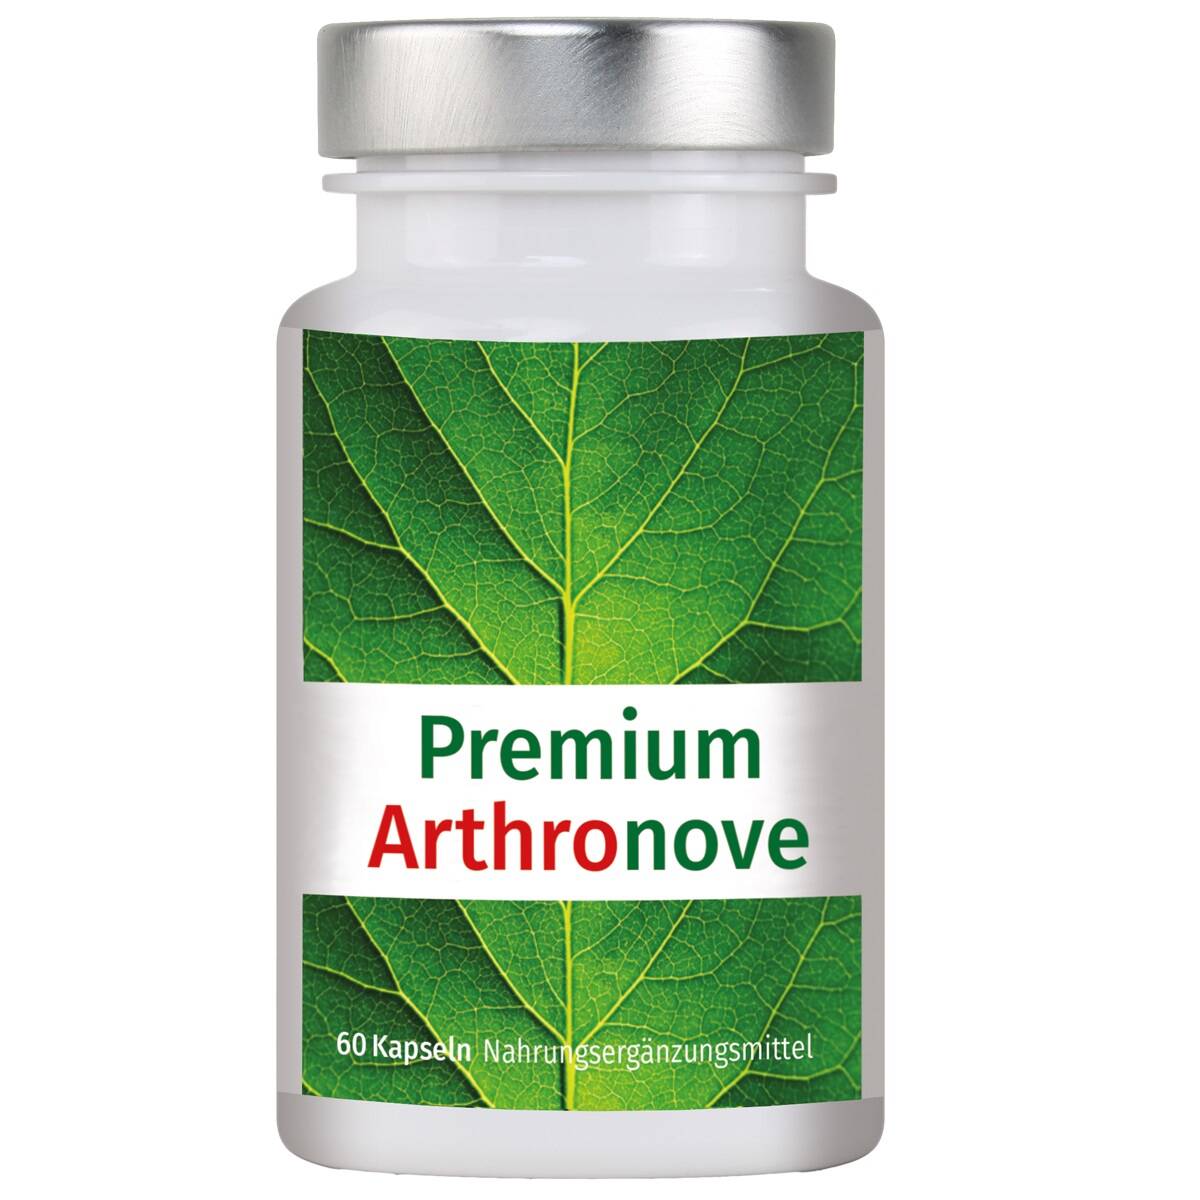 Premium Arthronove